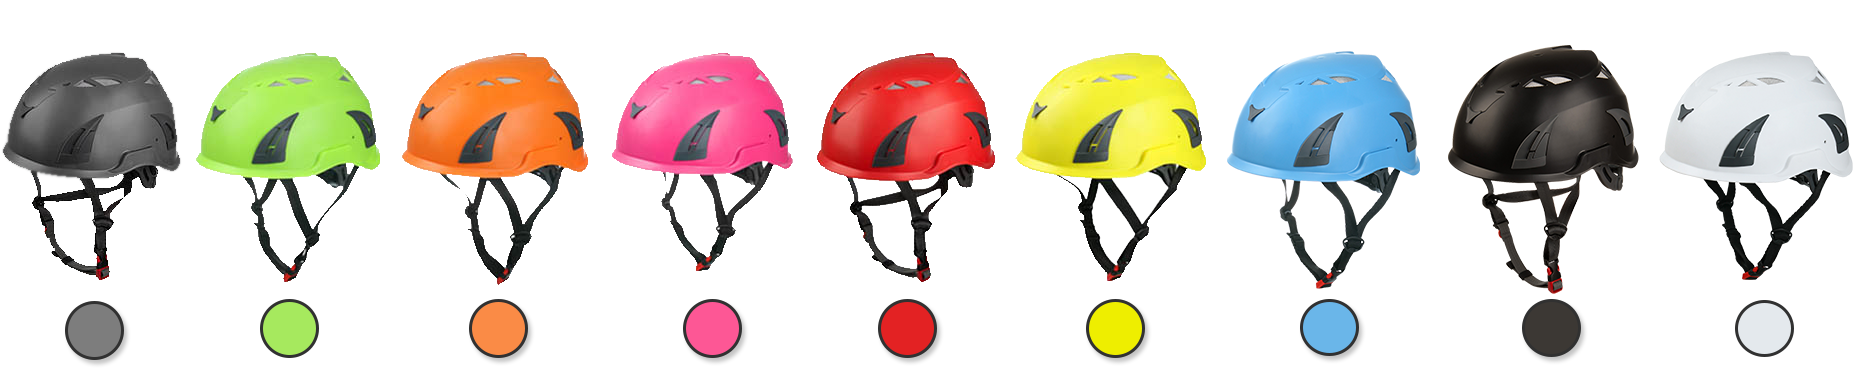 safety helmet different color